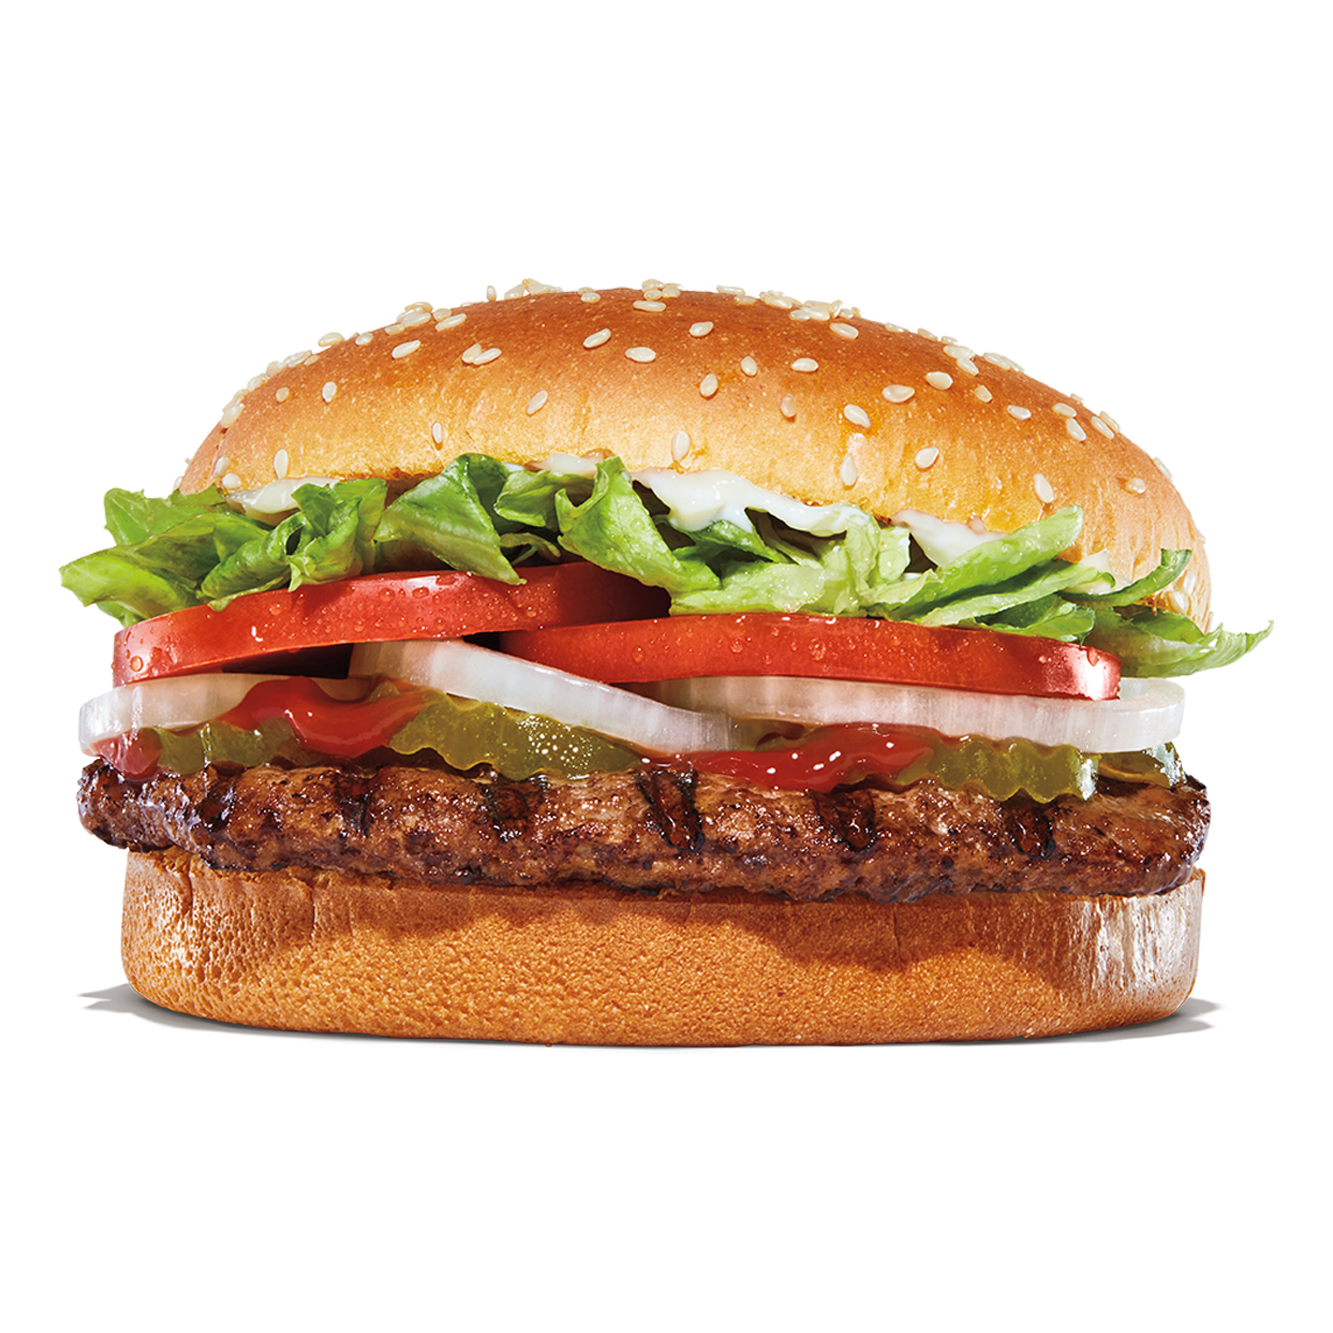 Burger King Chicago (872)264-8270